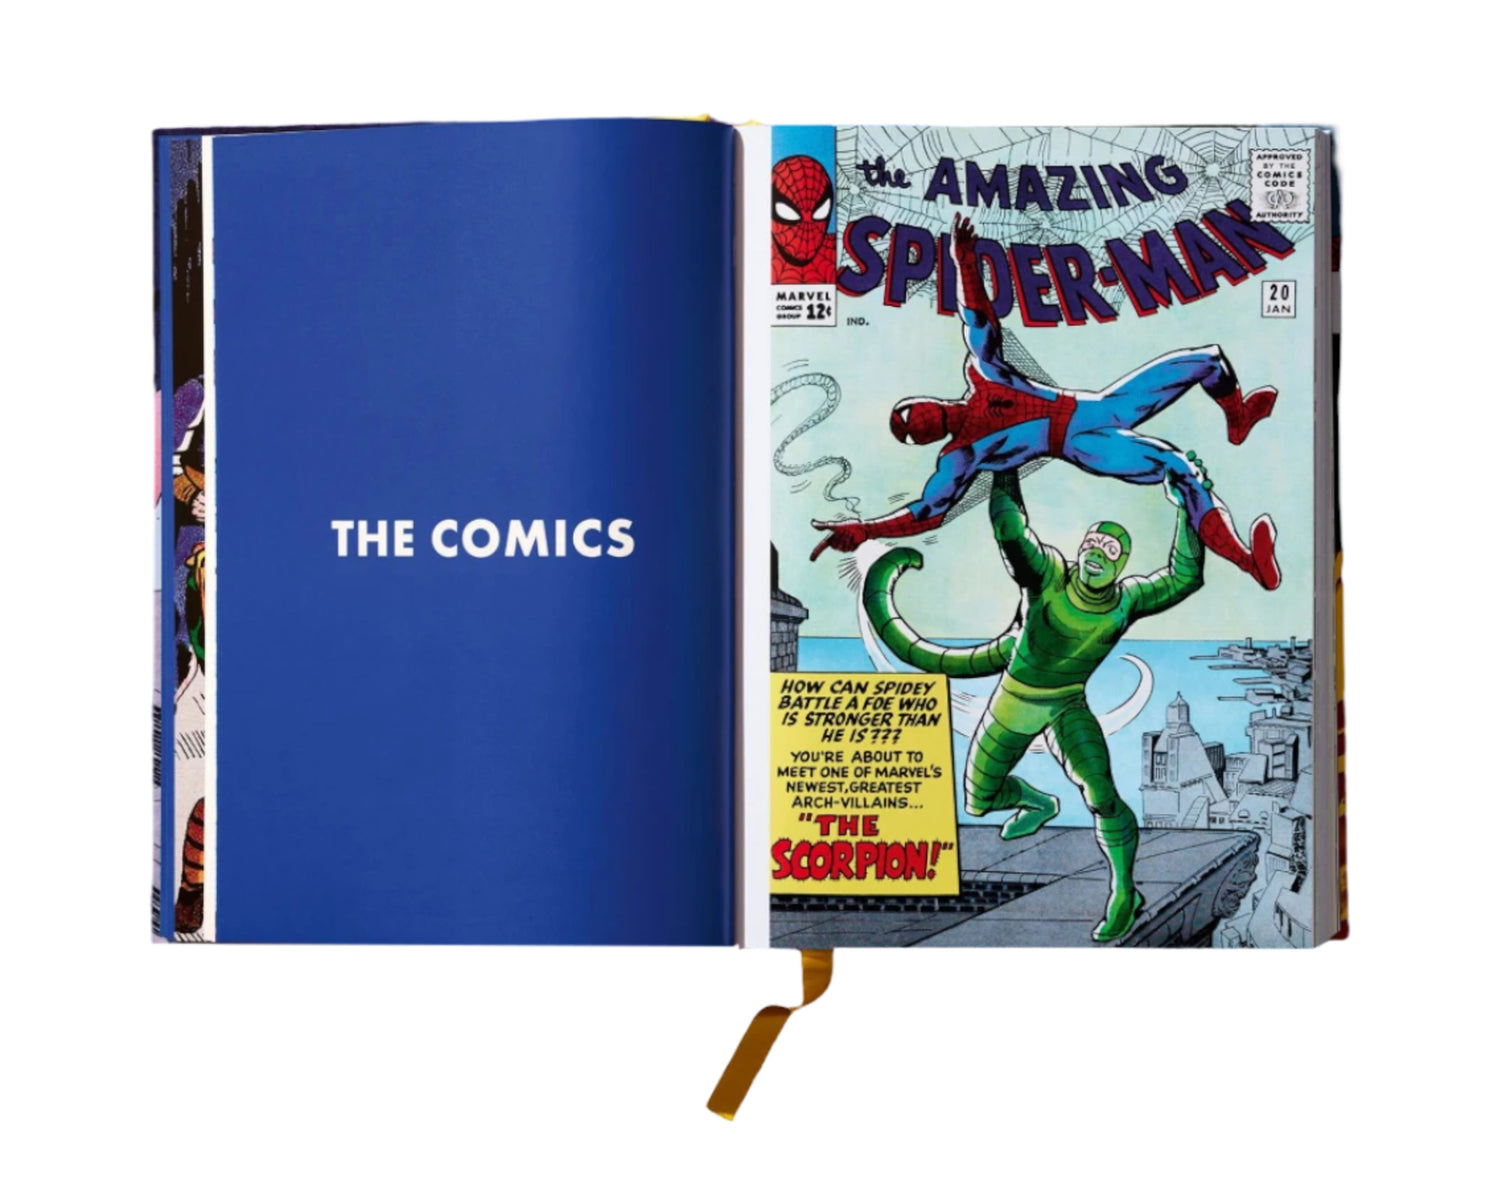 Taschen Books - Marvel Comics Library. Spider-Man. Vol. 2. 1965–1966 - Hardcover Book